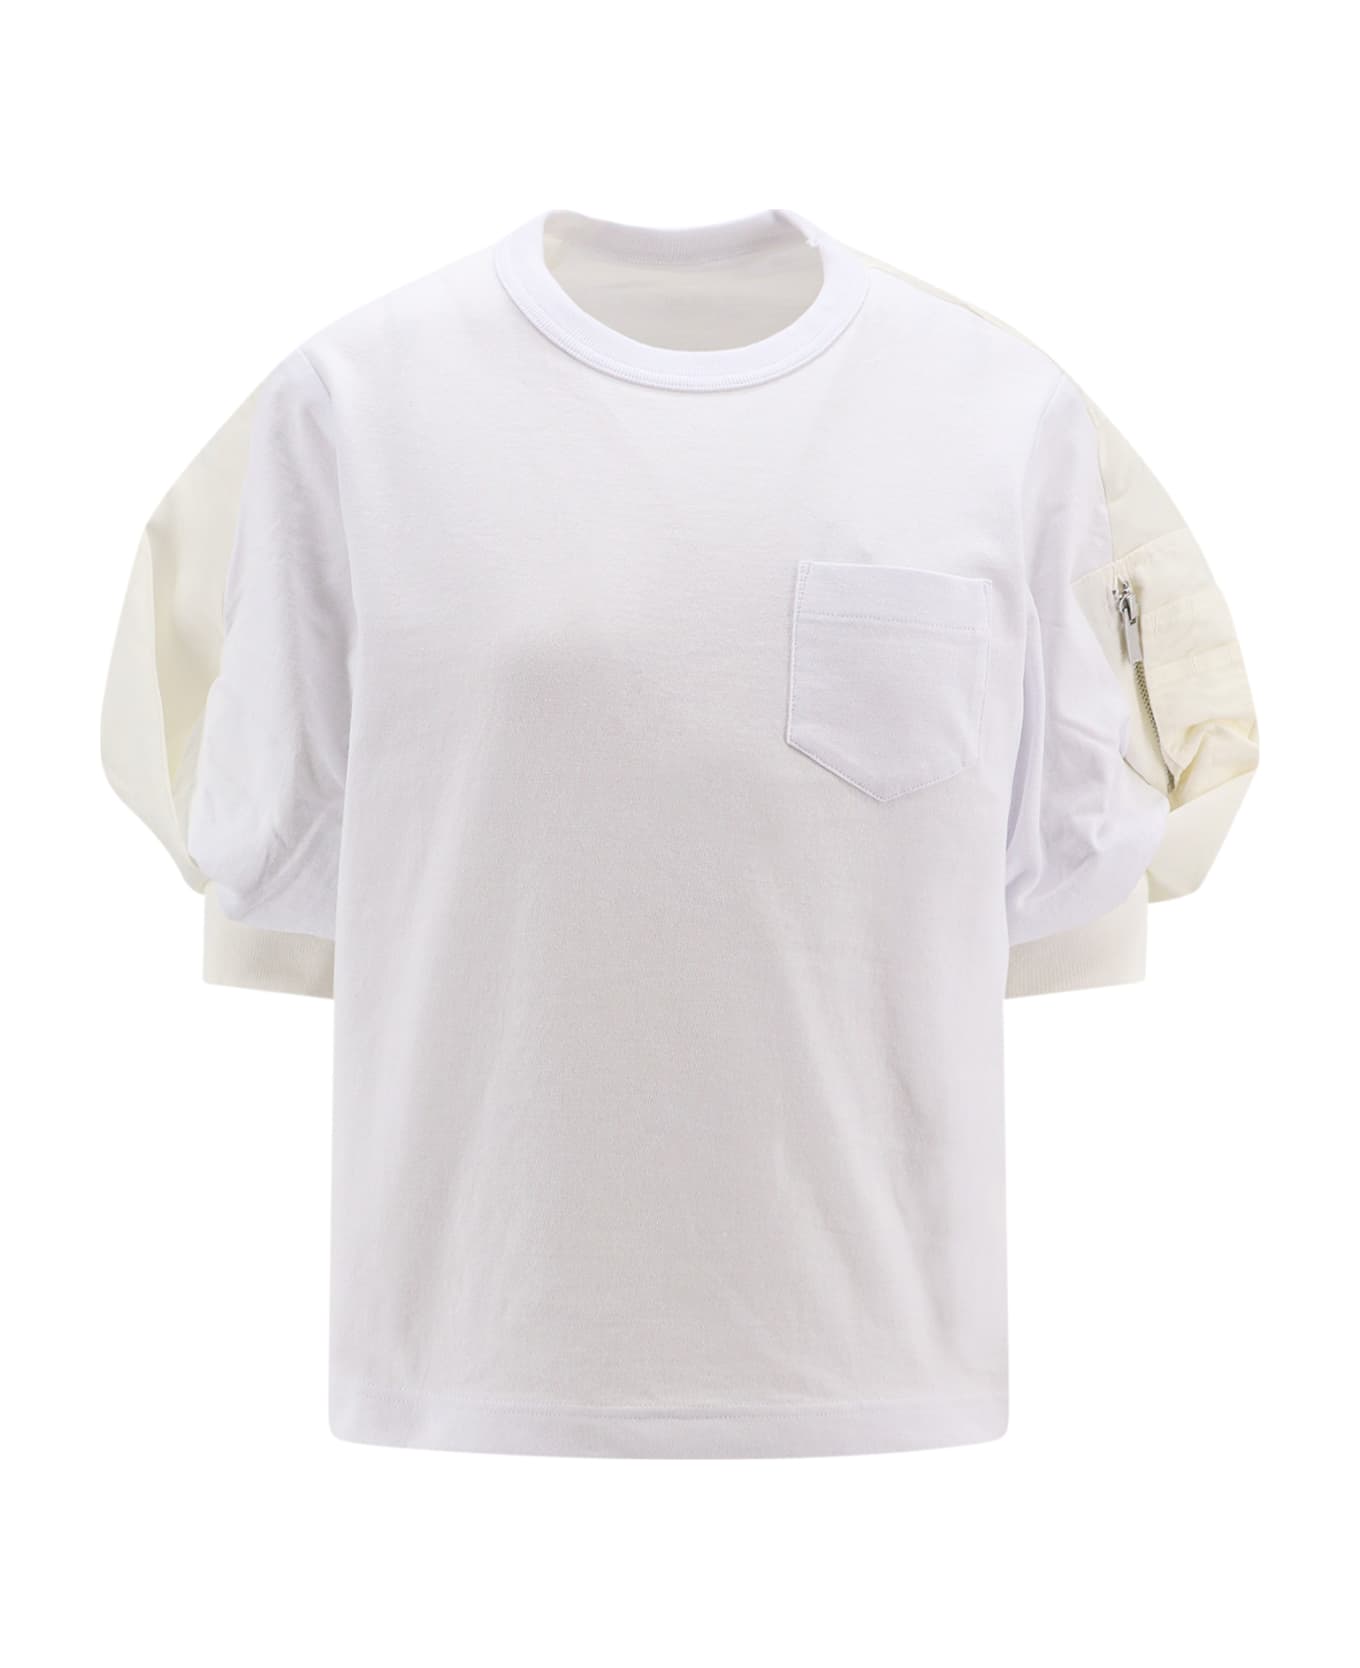 Sacai White Cotton T-shirt - White